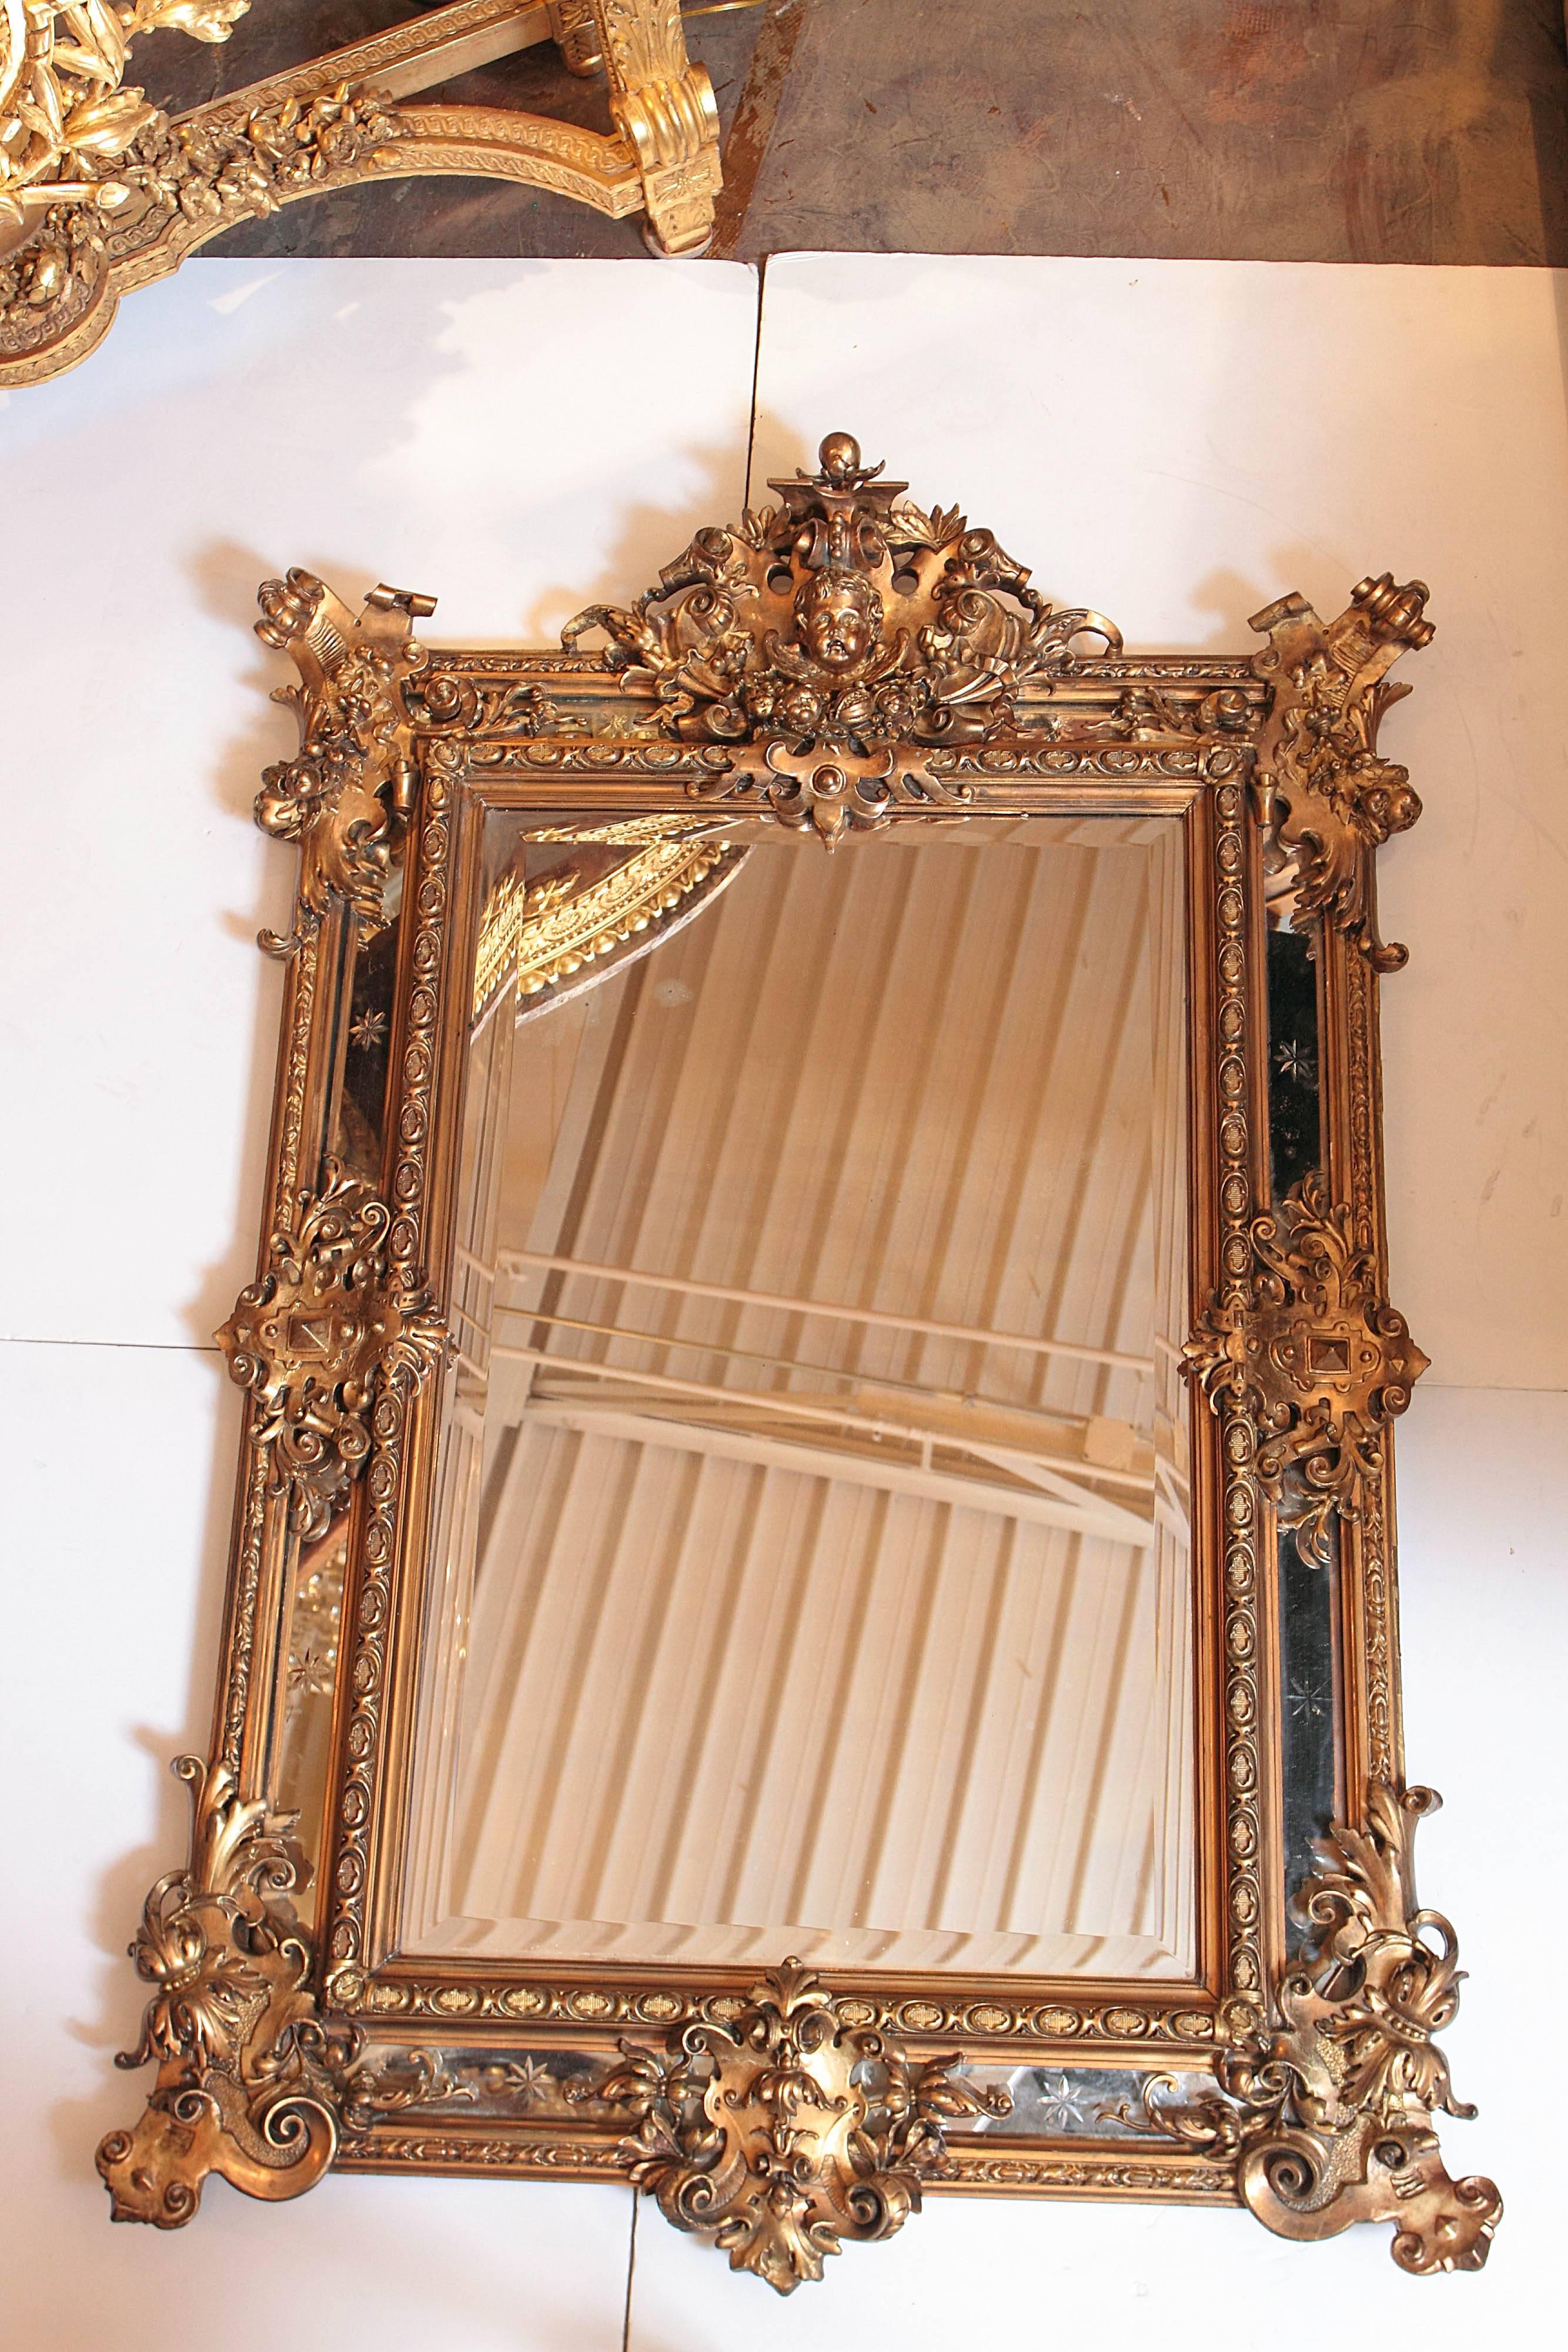 19th century French Louis Philippe gilt carved cherub mirror.